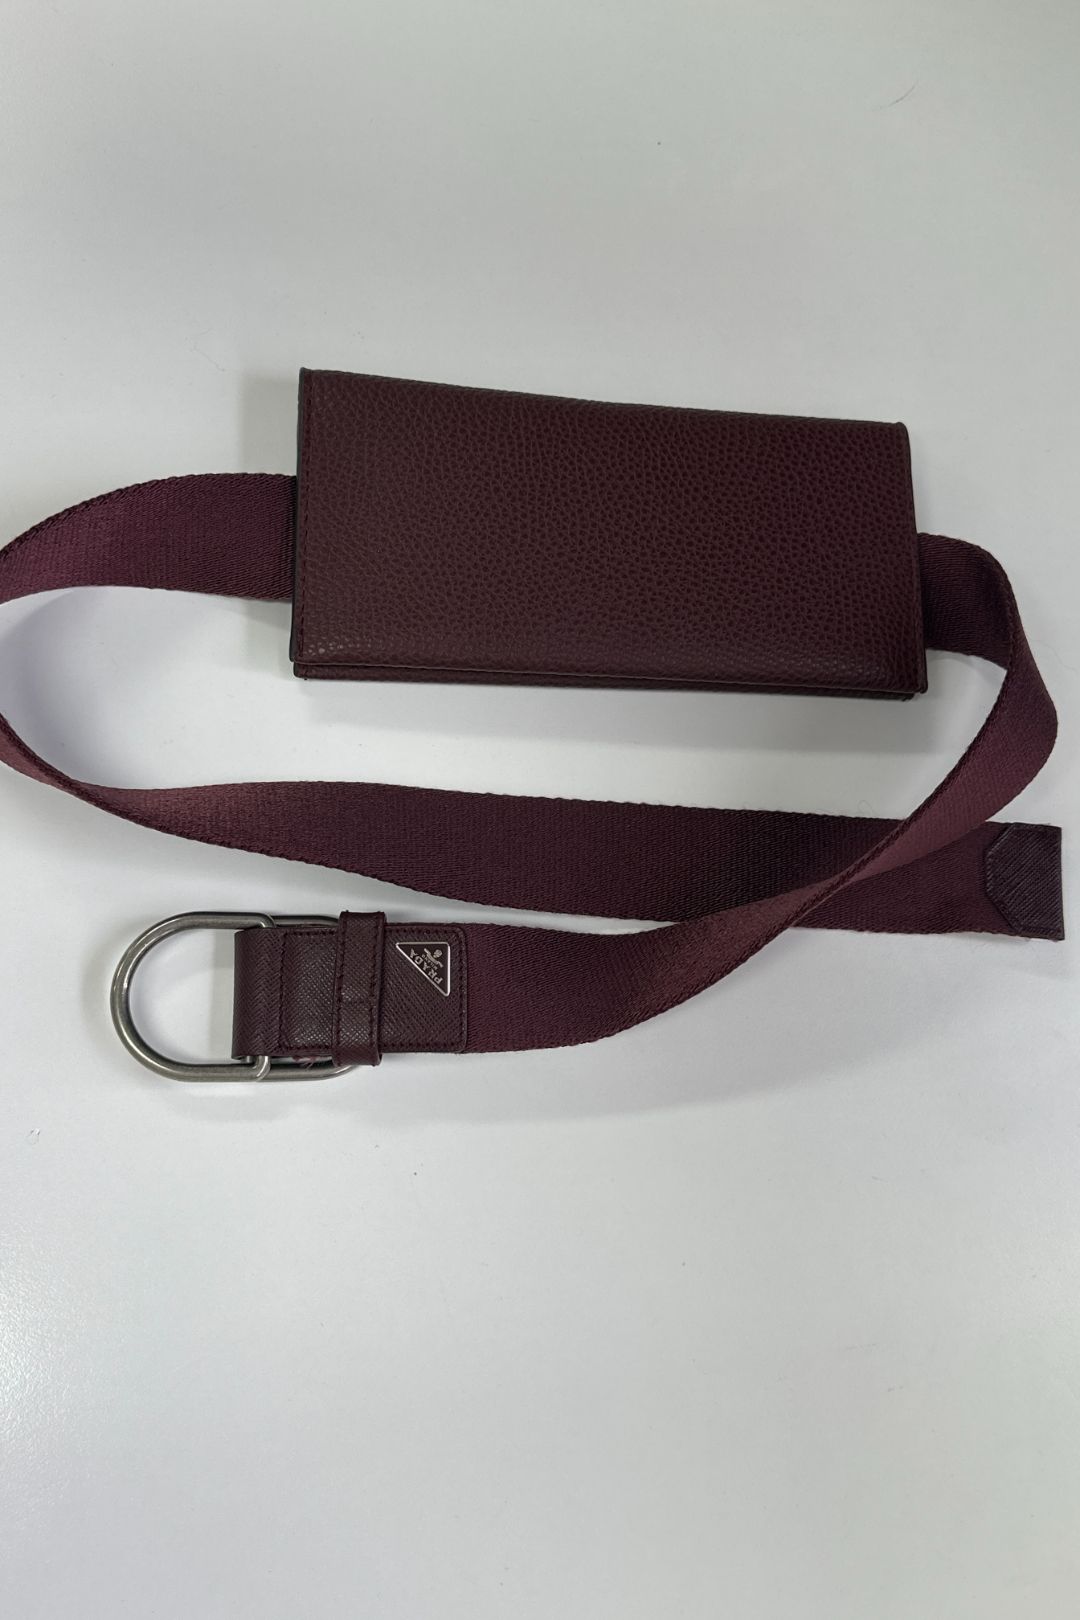 Prada Maroon Leather Wallet on Belt